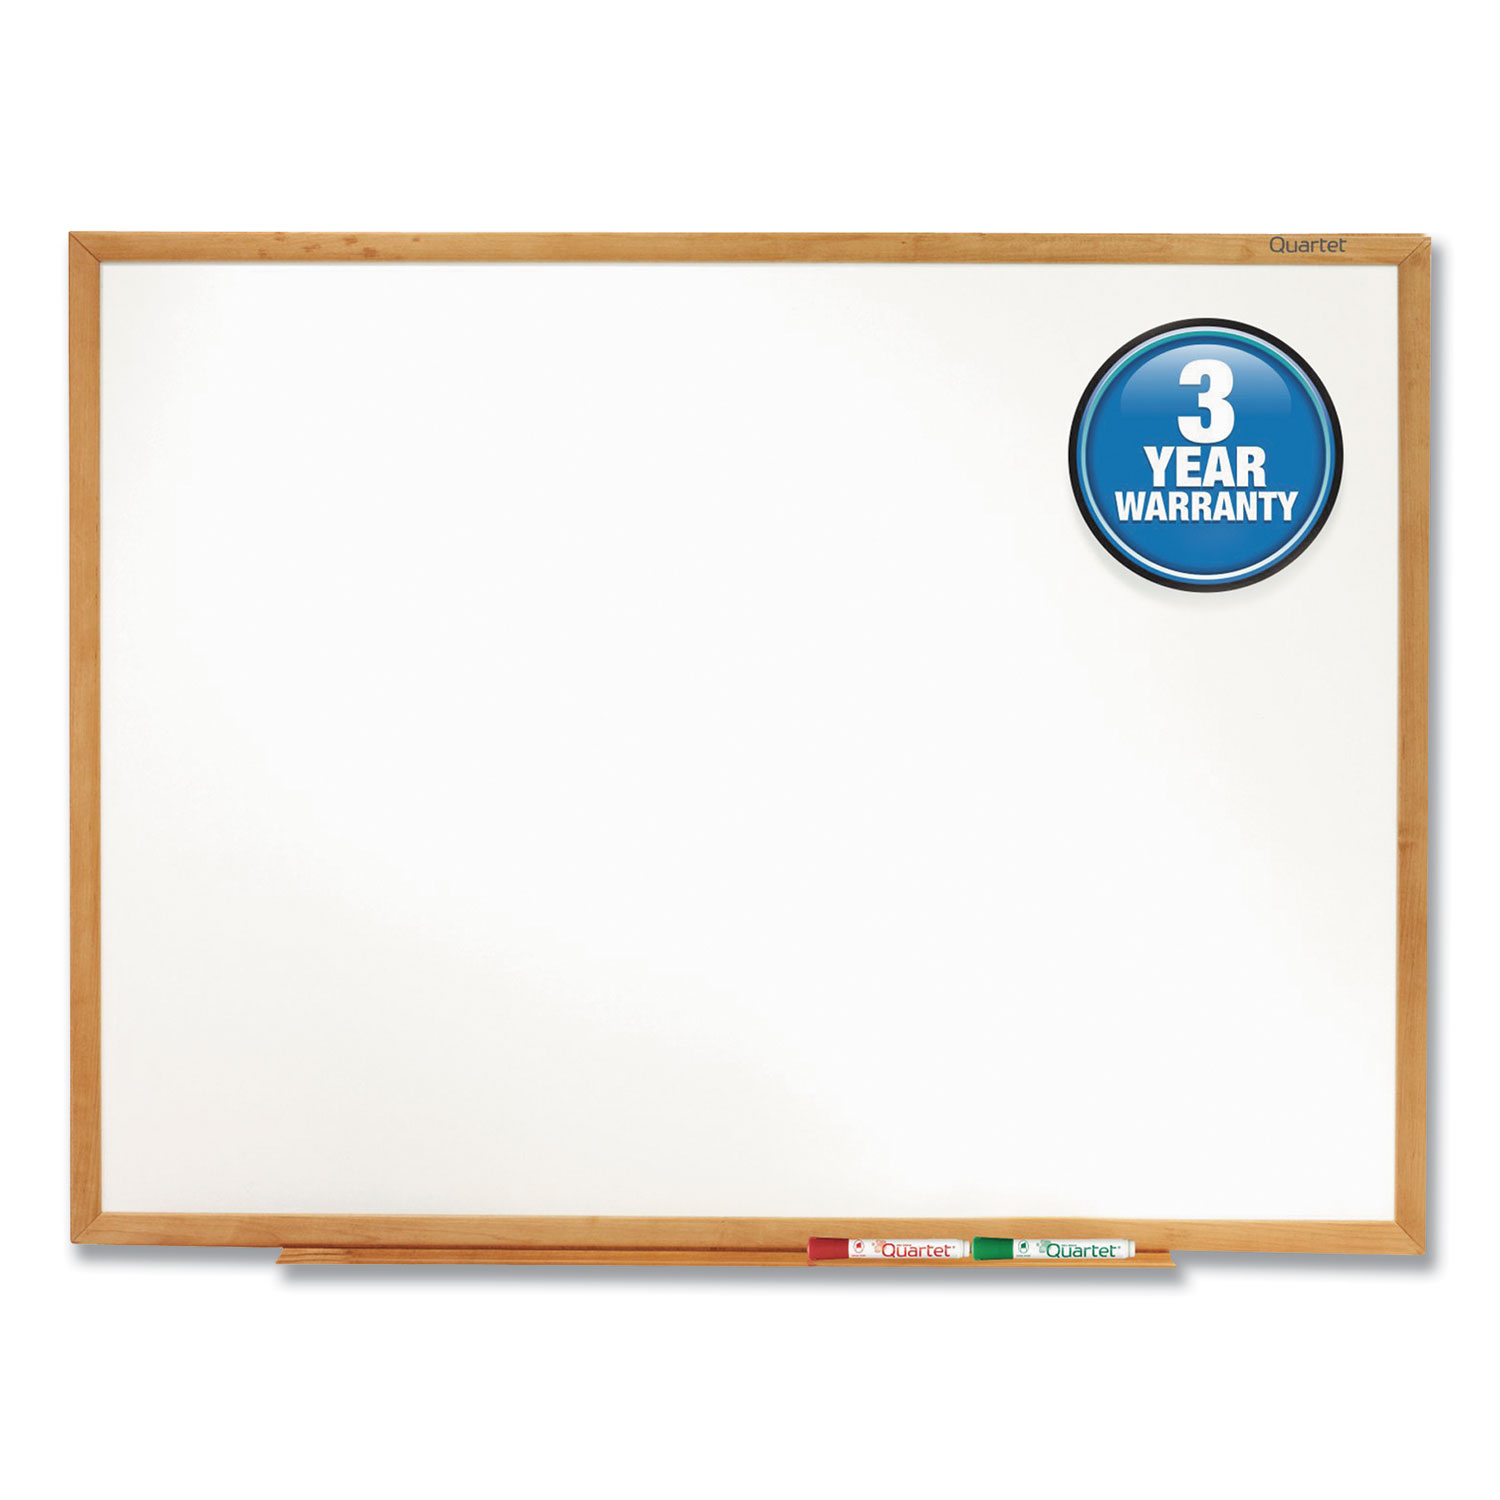  Quartet S577 Classic Series Total Erase Dry Erase Board, 72 x 48, Oak Finish Frame (QRTS577) 